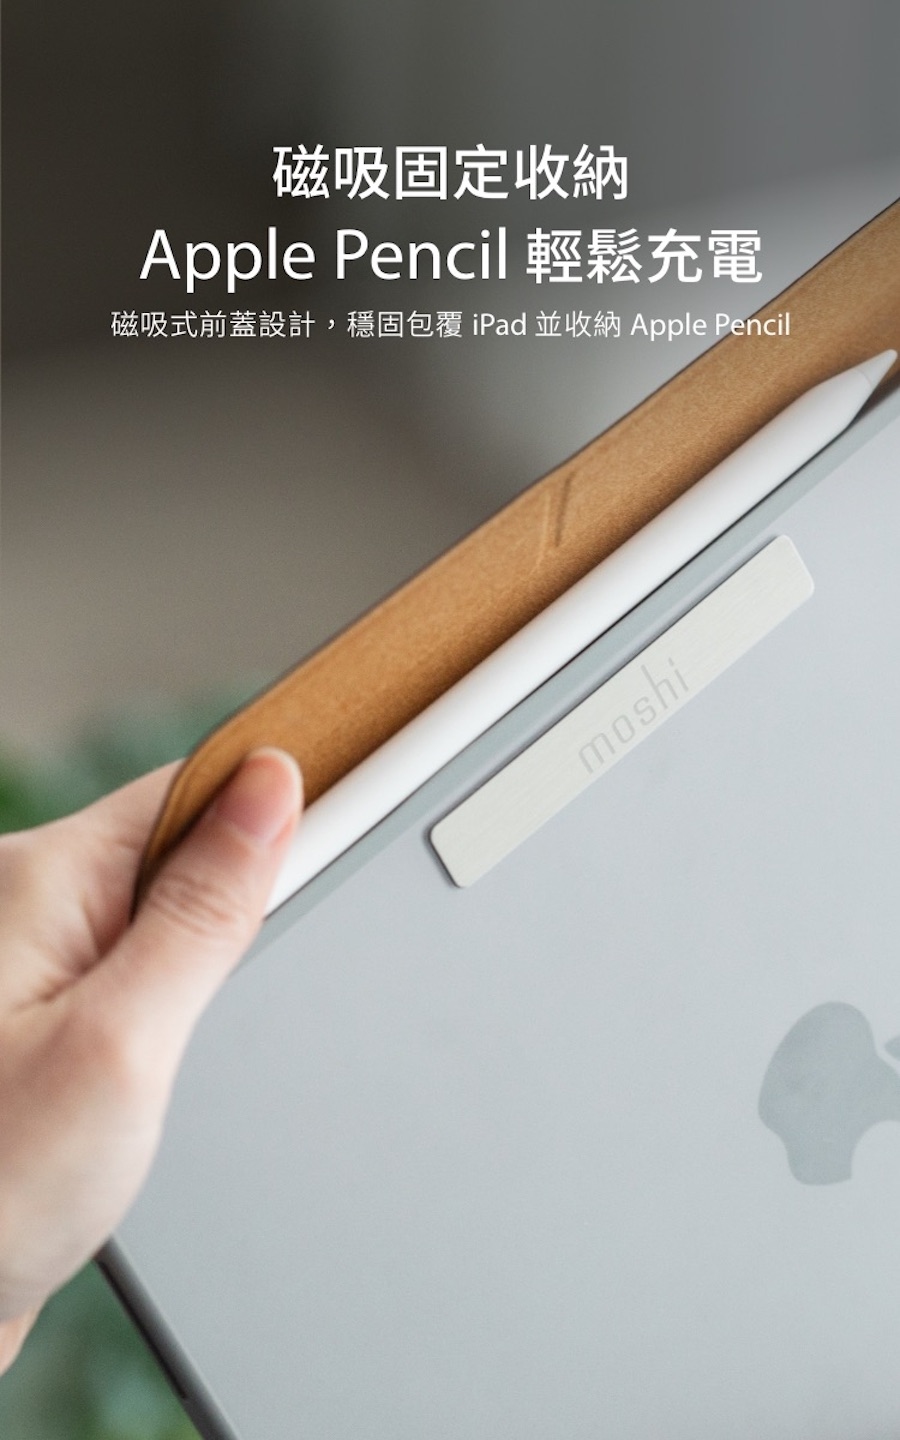 moshi iPad Pro 11吋 VersaCover 多角度前後保護套 (適用 2018 1st Gen /2020 2nd Gen)